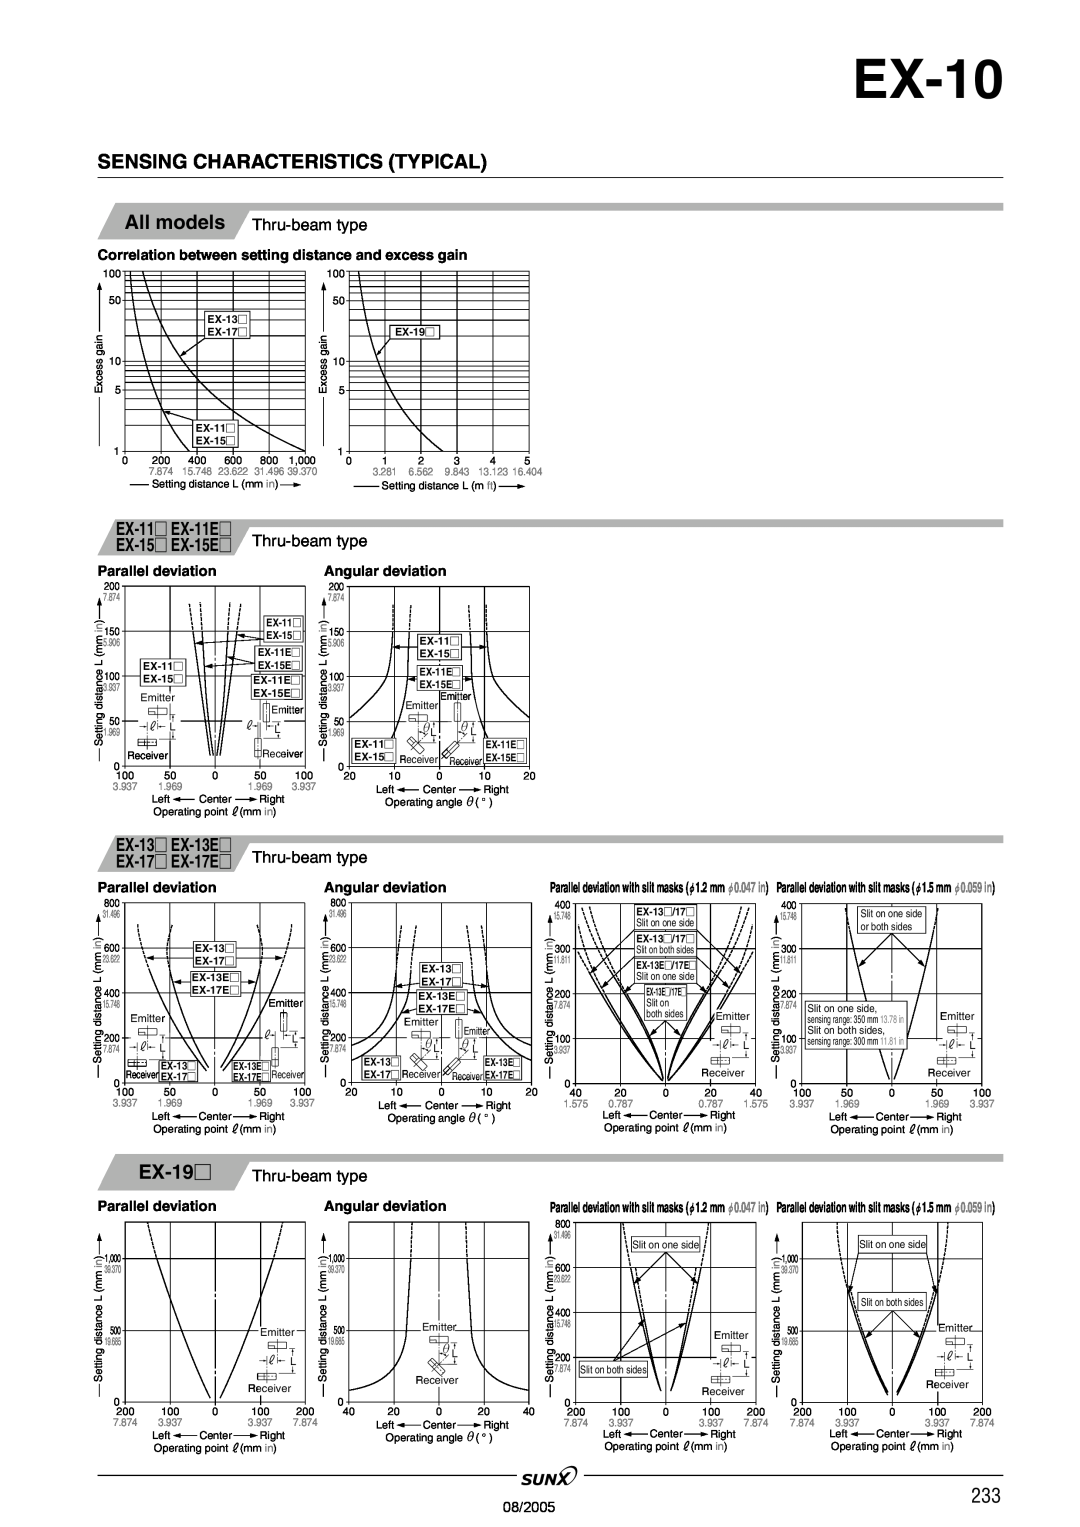 Panasonic EX-10 Series Sensing Characteristics Typical, EX-19, All models Thru-beamtype, EX-11 EX-11E, EX-15 EX-15E 